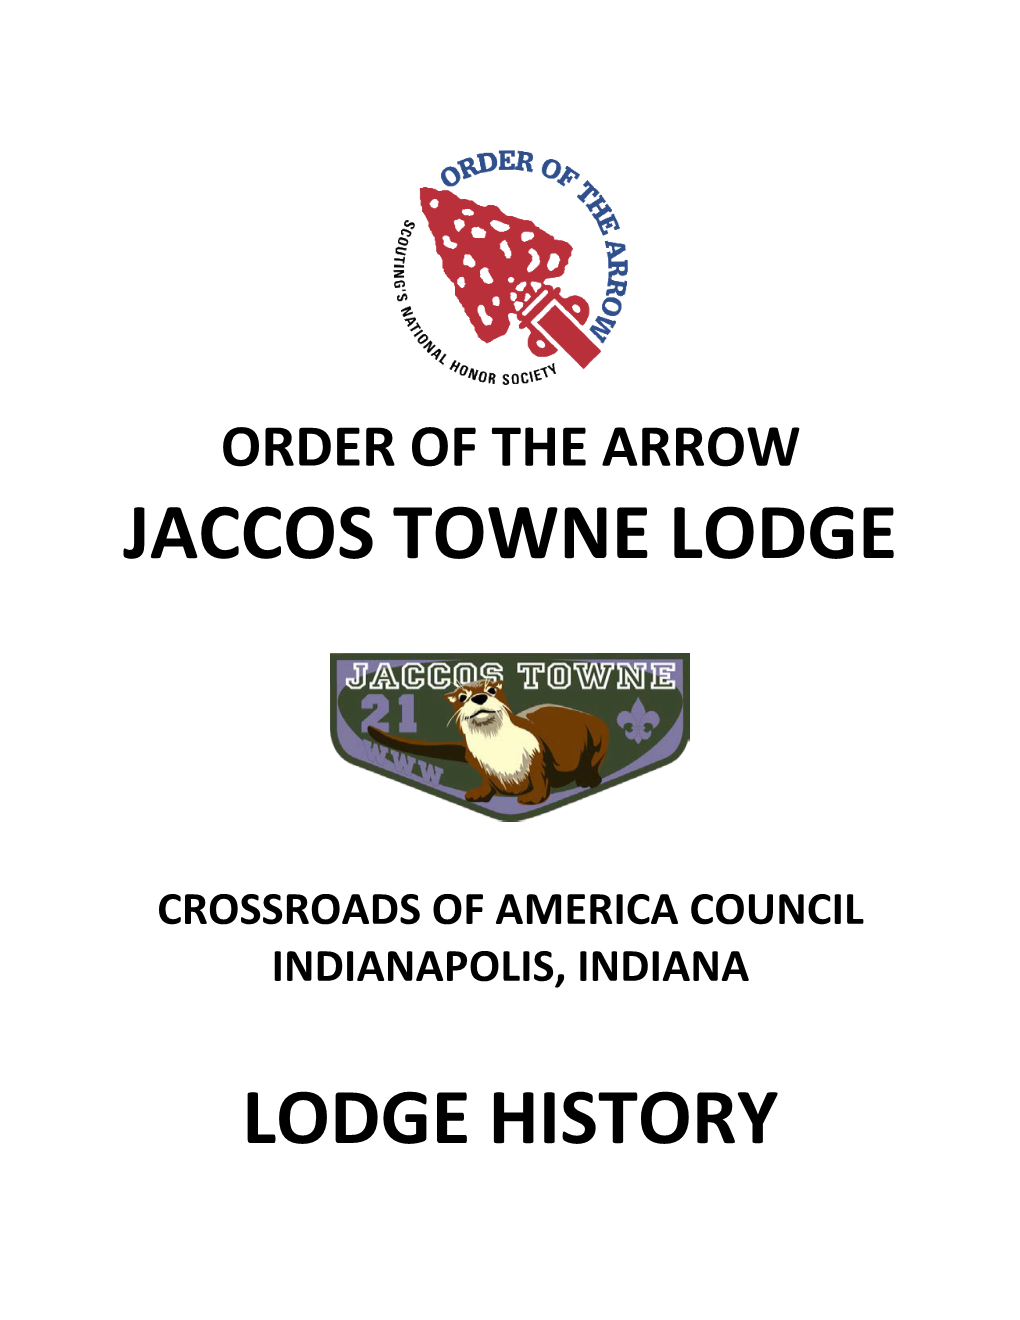 Jaccos Towne Lodge Lodge History